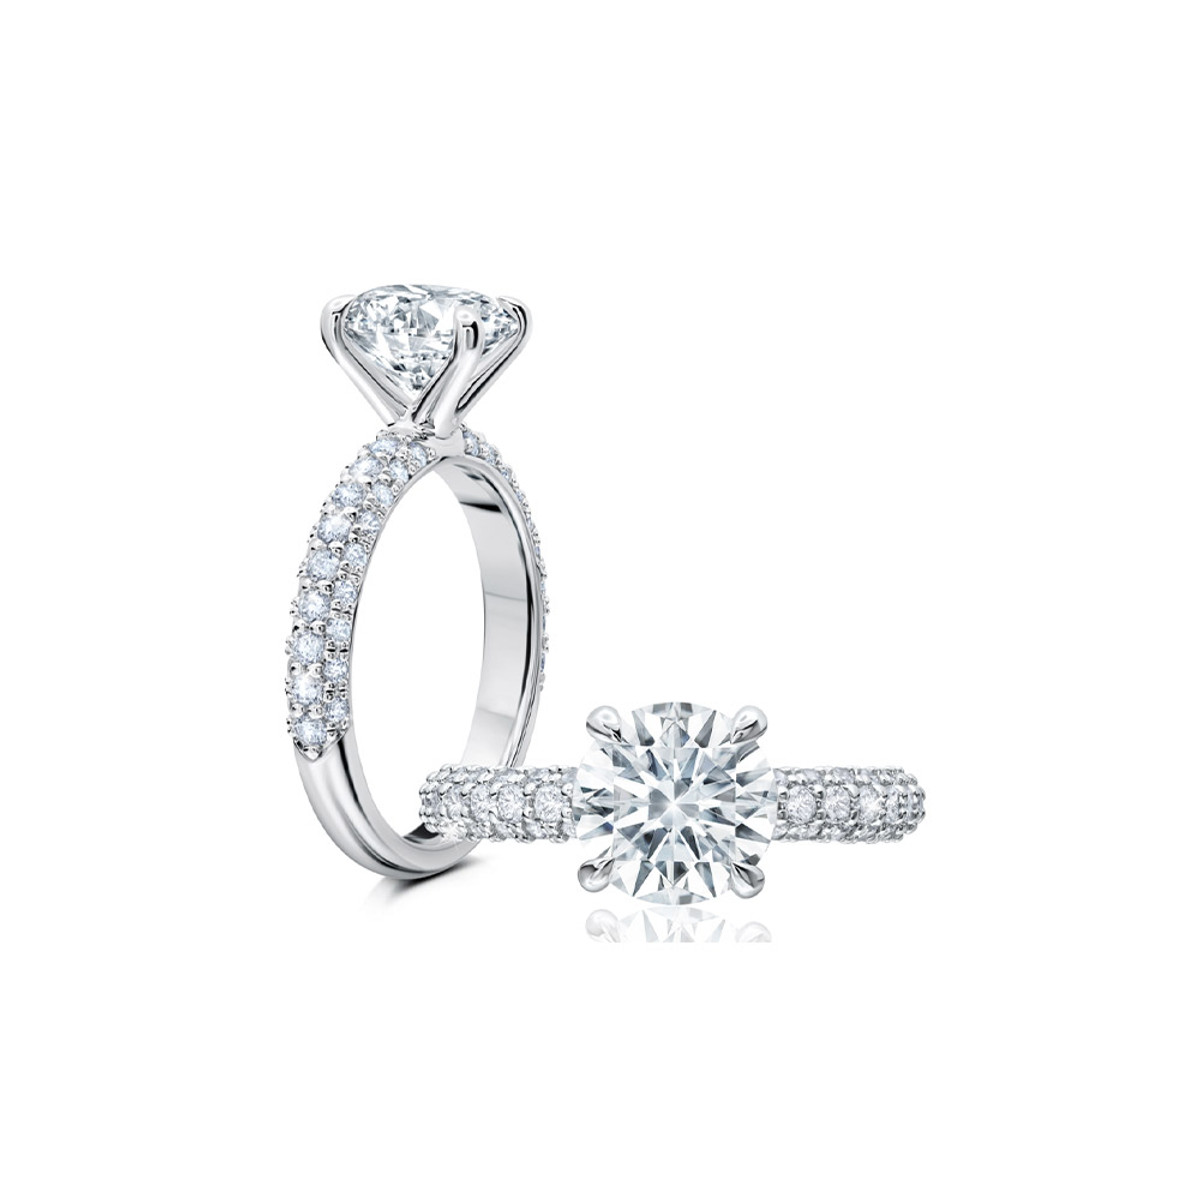 Peter Storm 14K White Gold Diamond Semi-Mount Engagement Ring-39113 Product Image